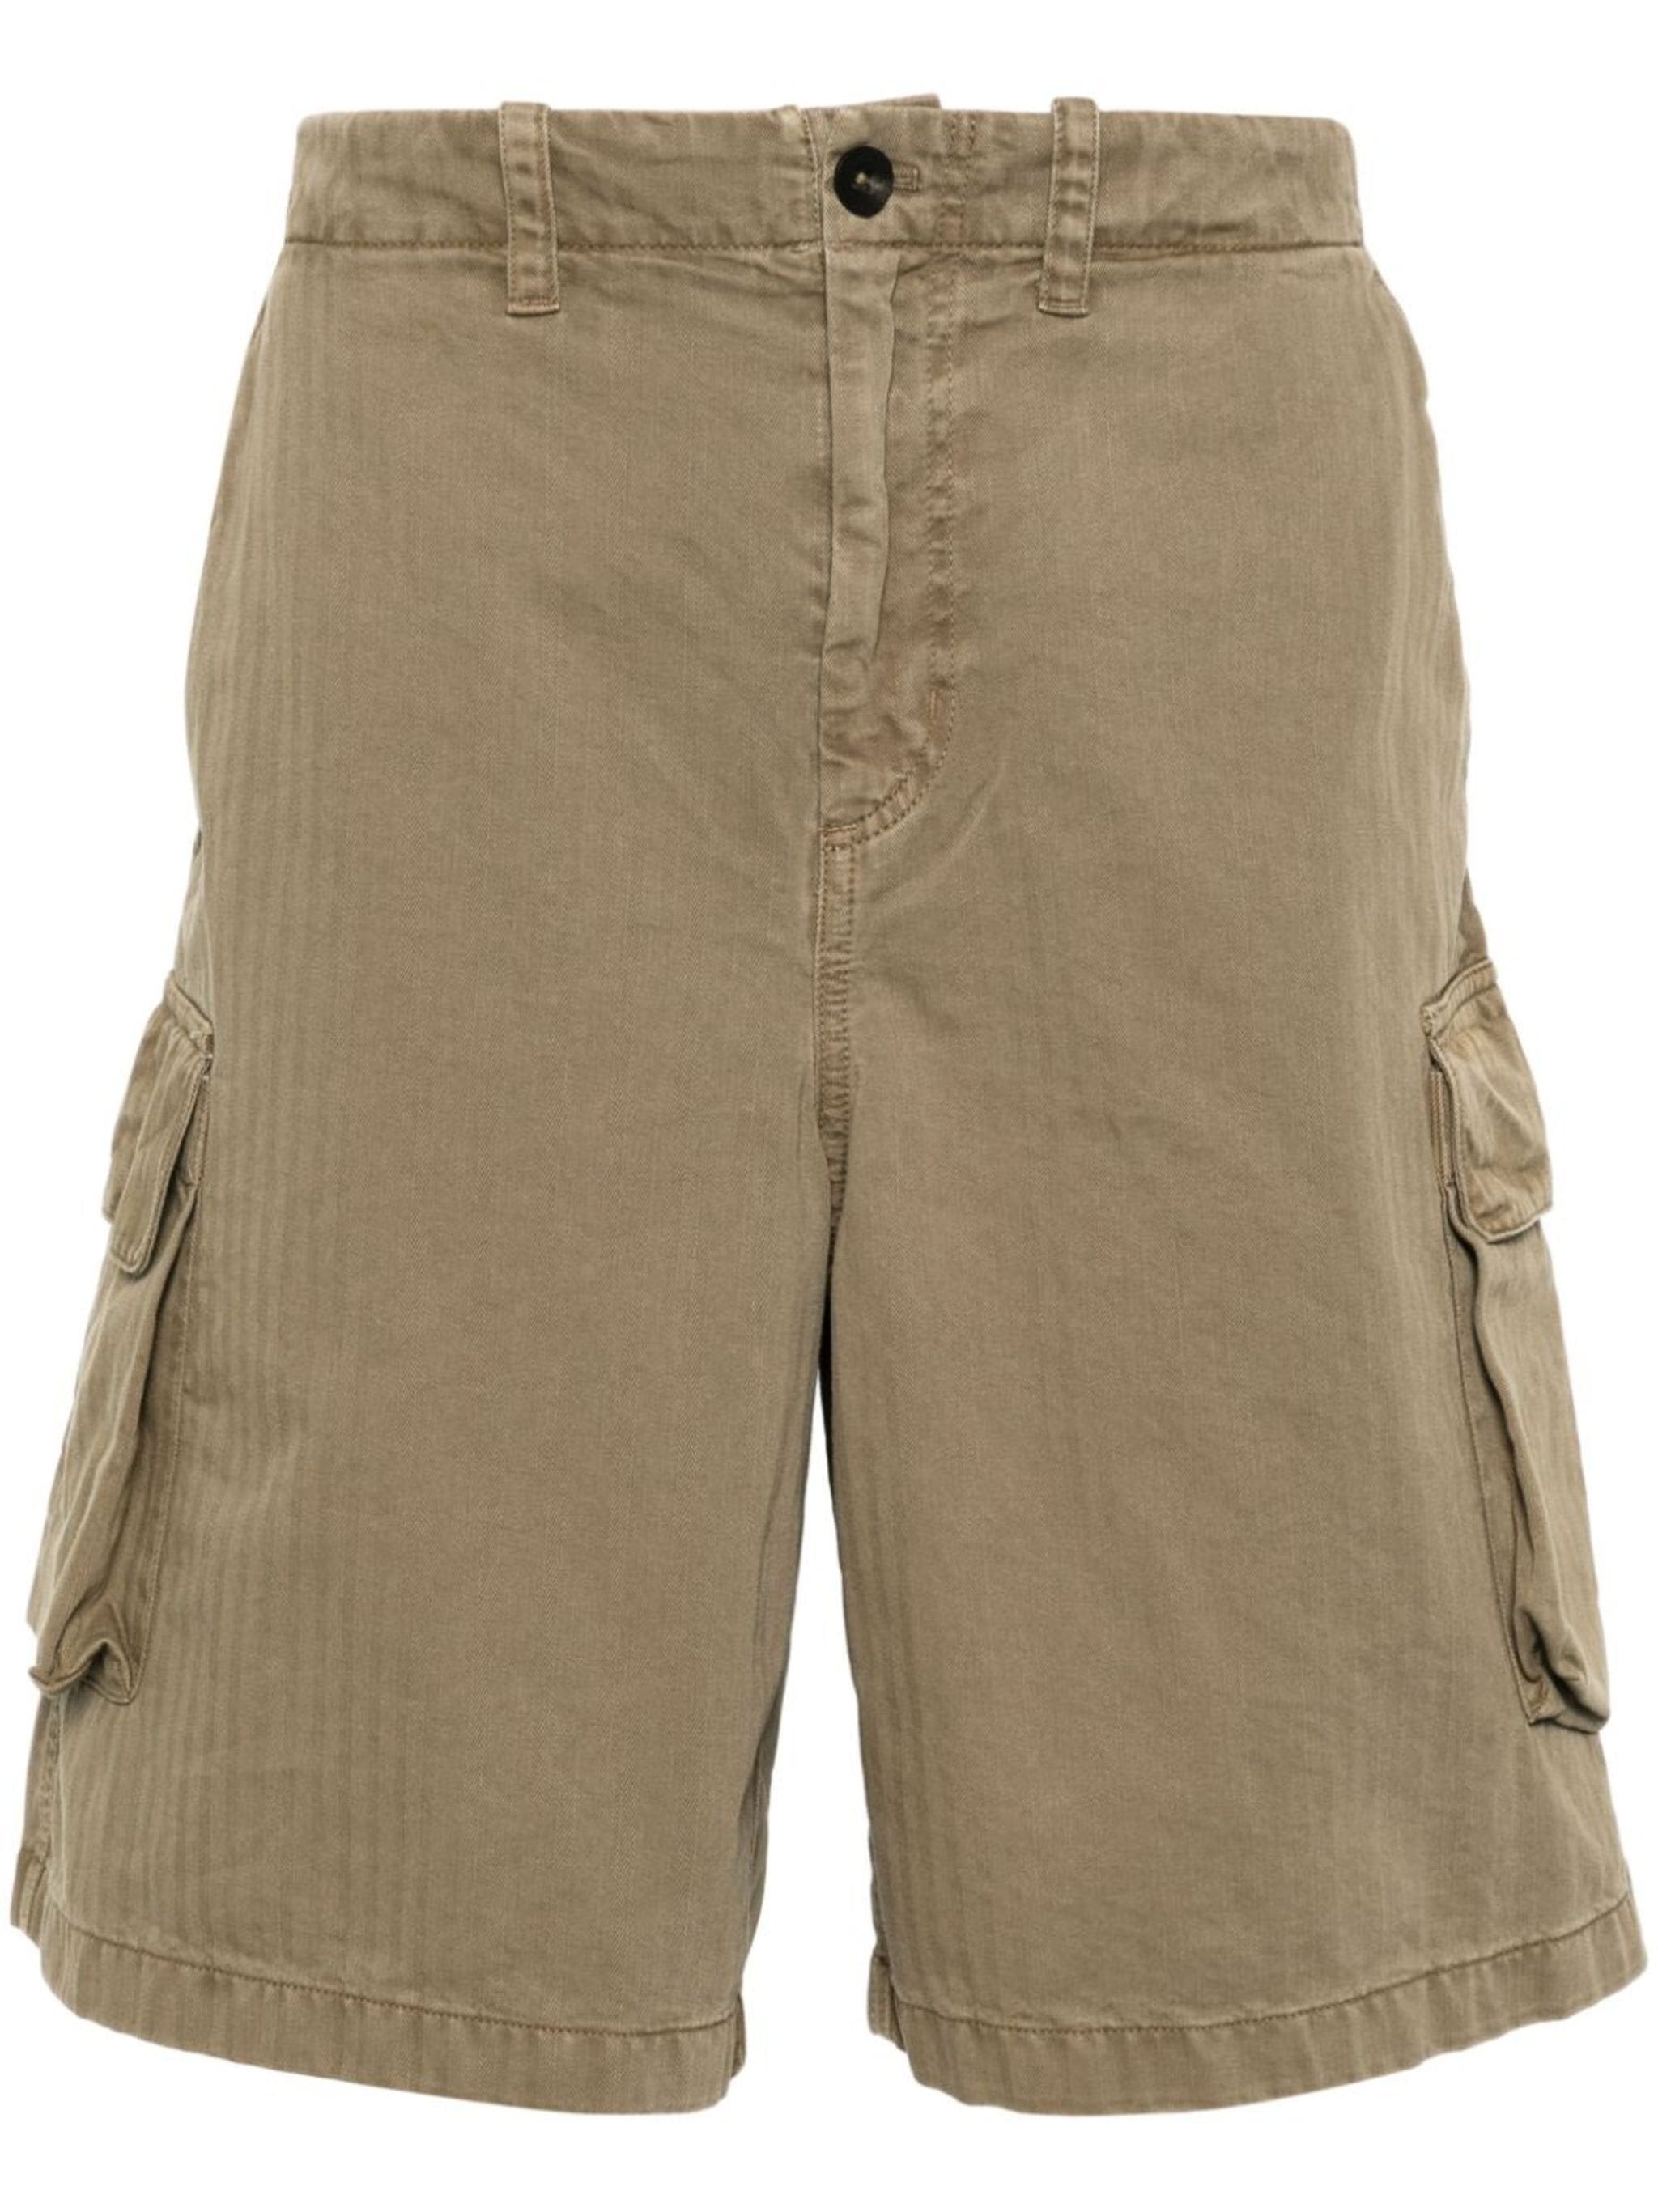 Mount cotton cargo shorts - 1